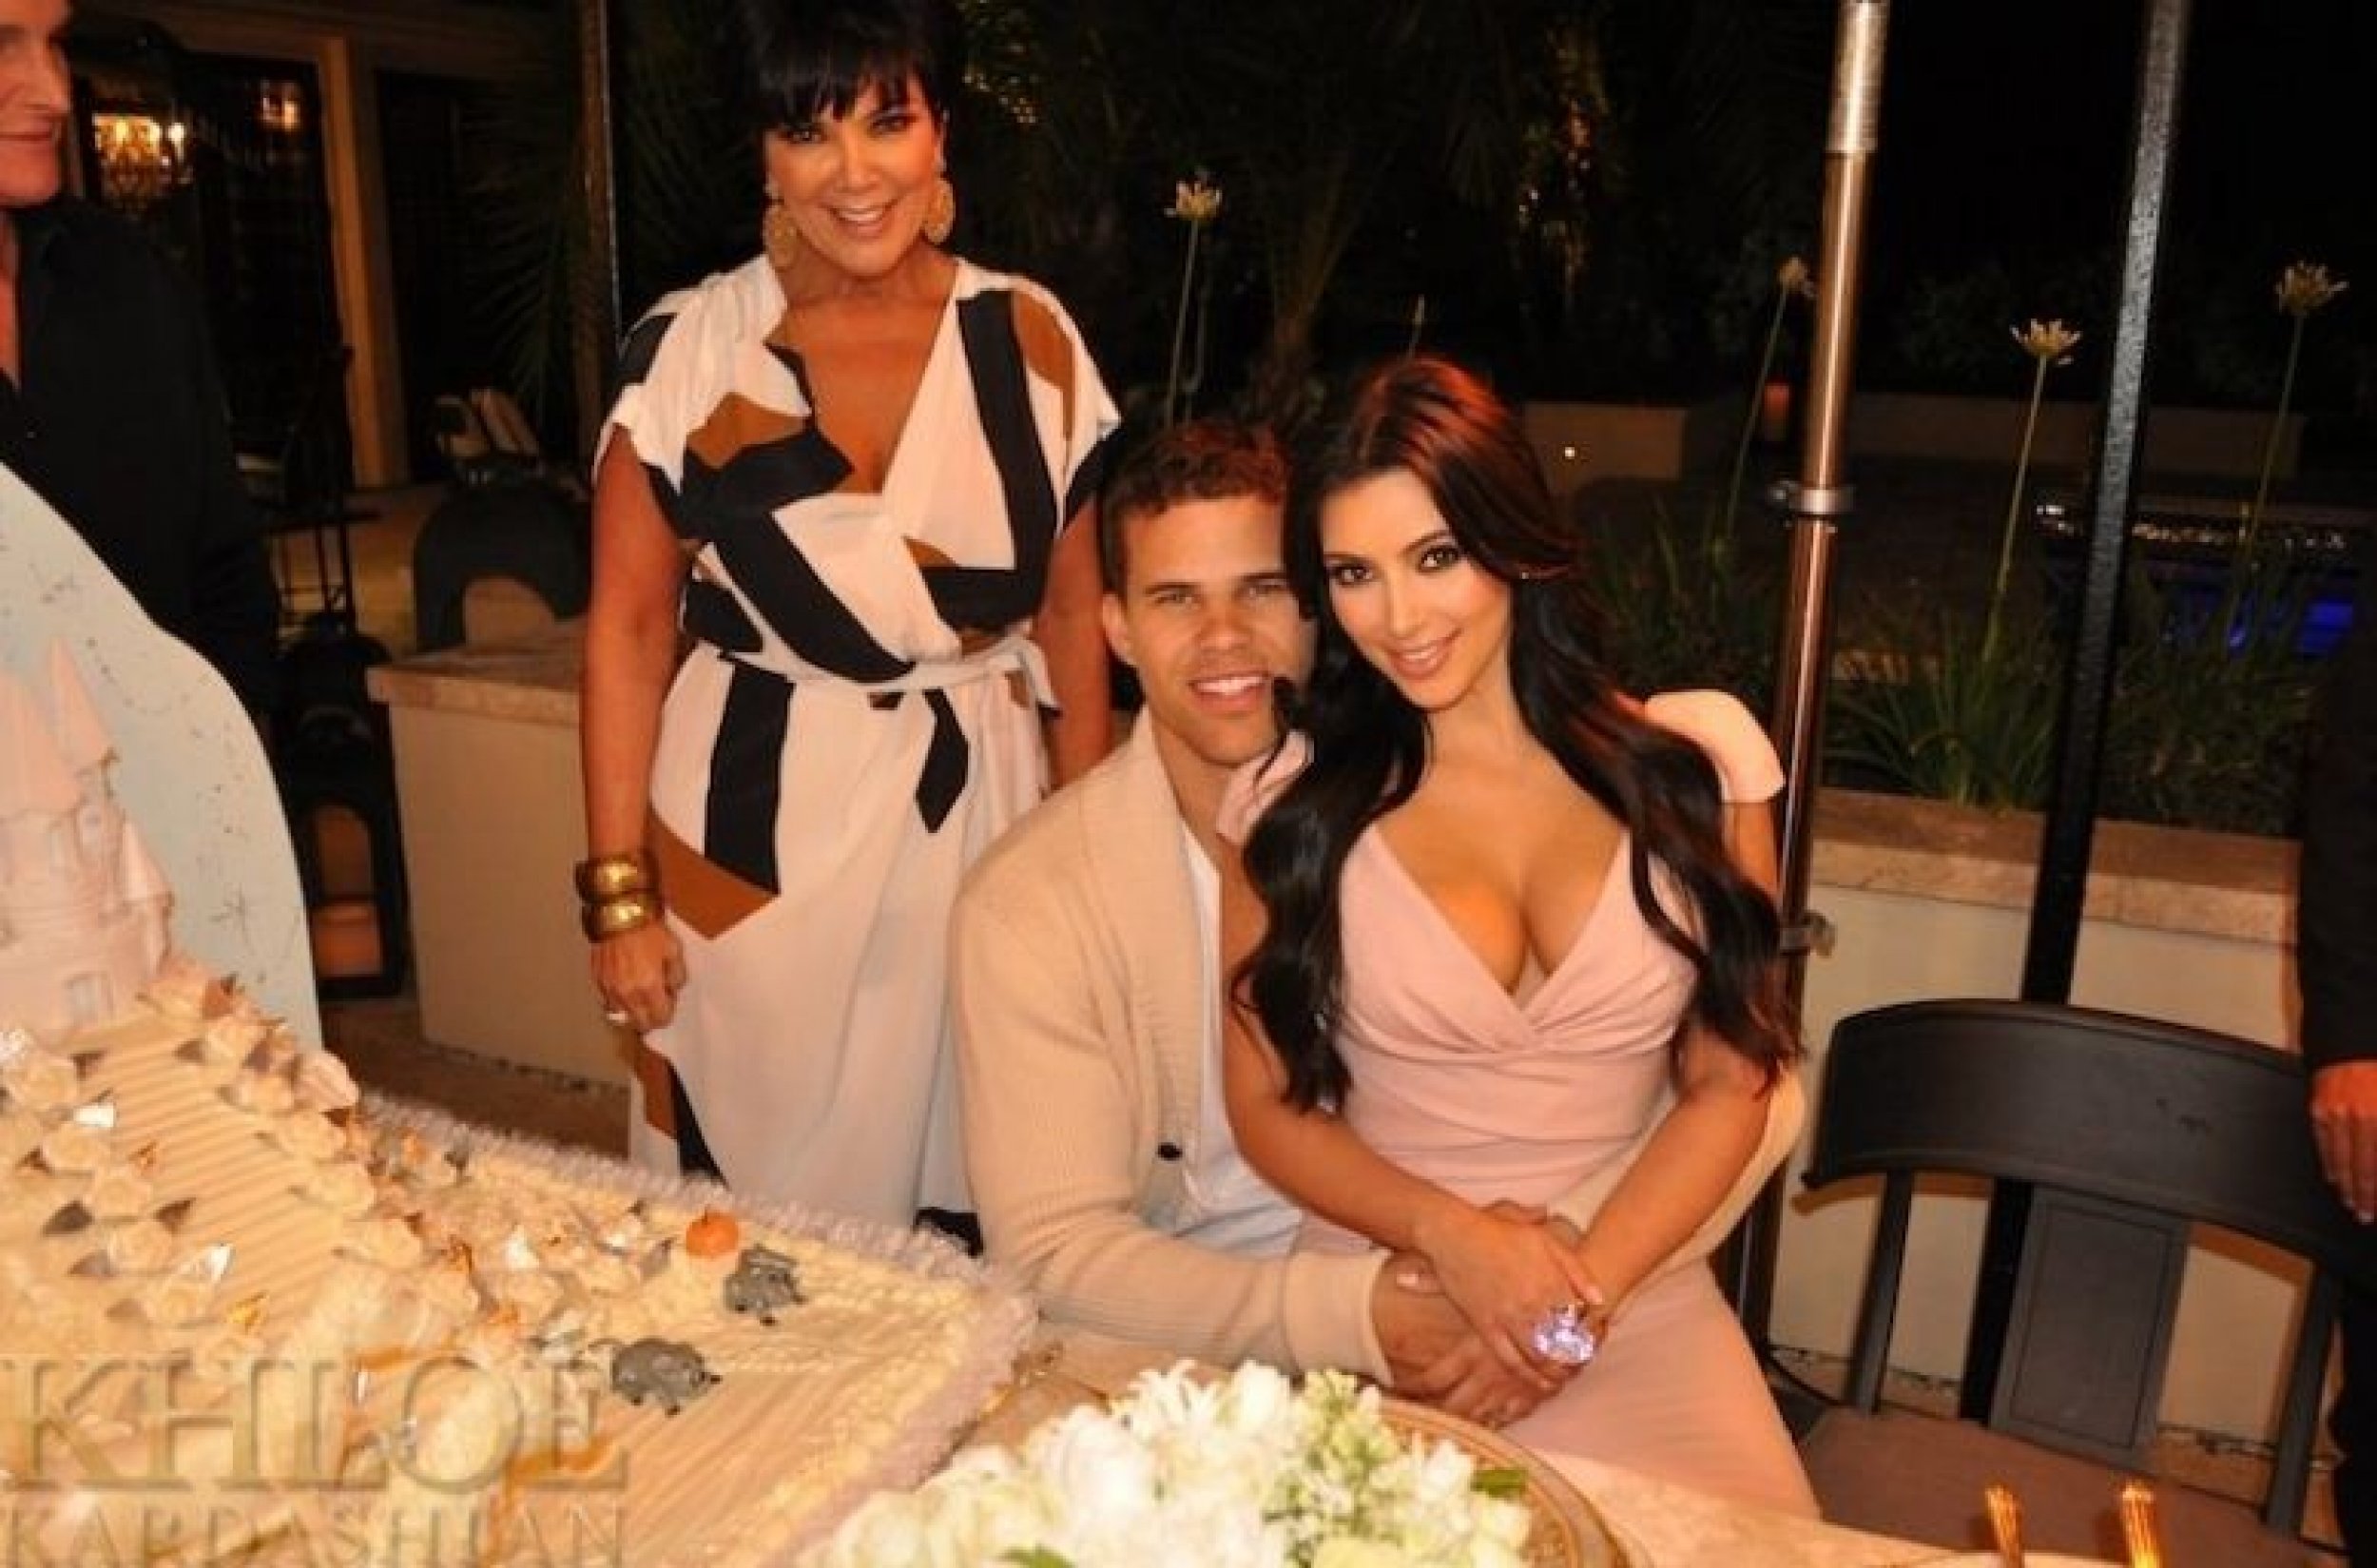 Reality TV star Kim Kardashian and basketball beau Kris Humphries got married 